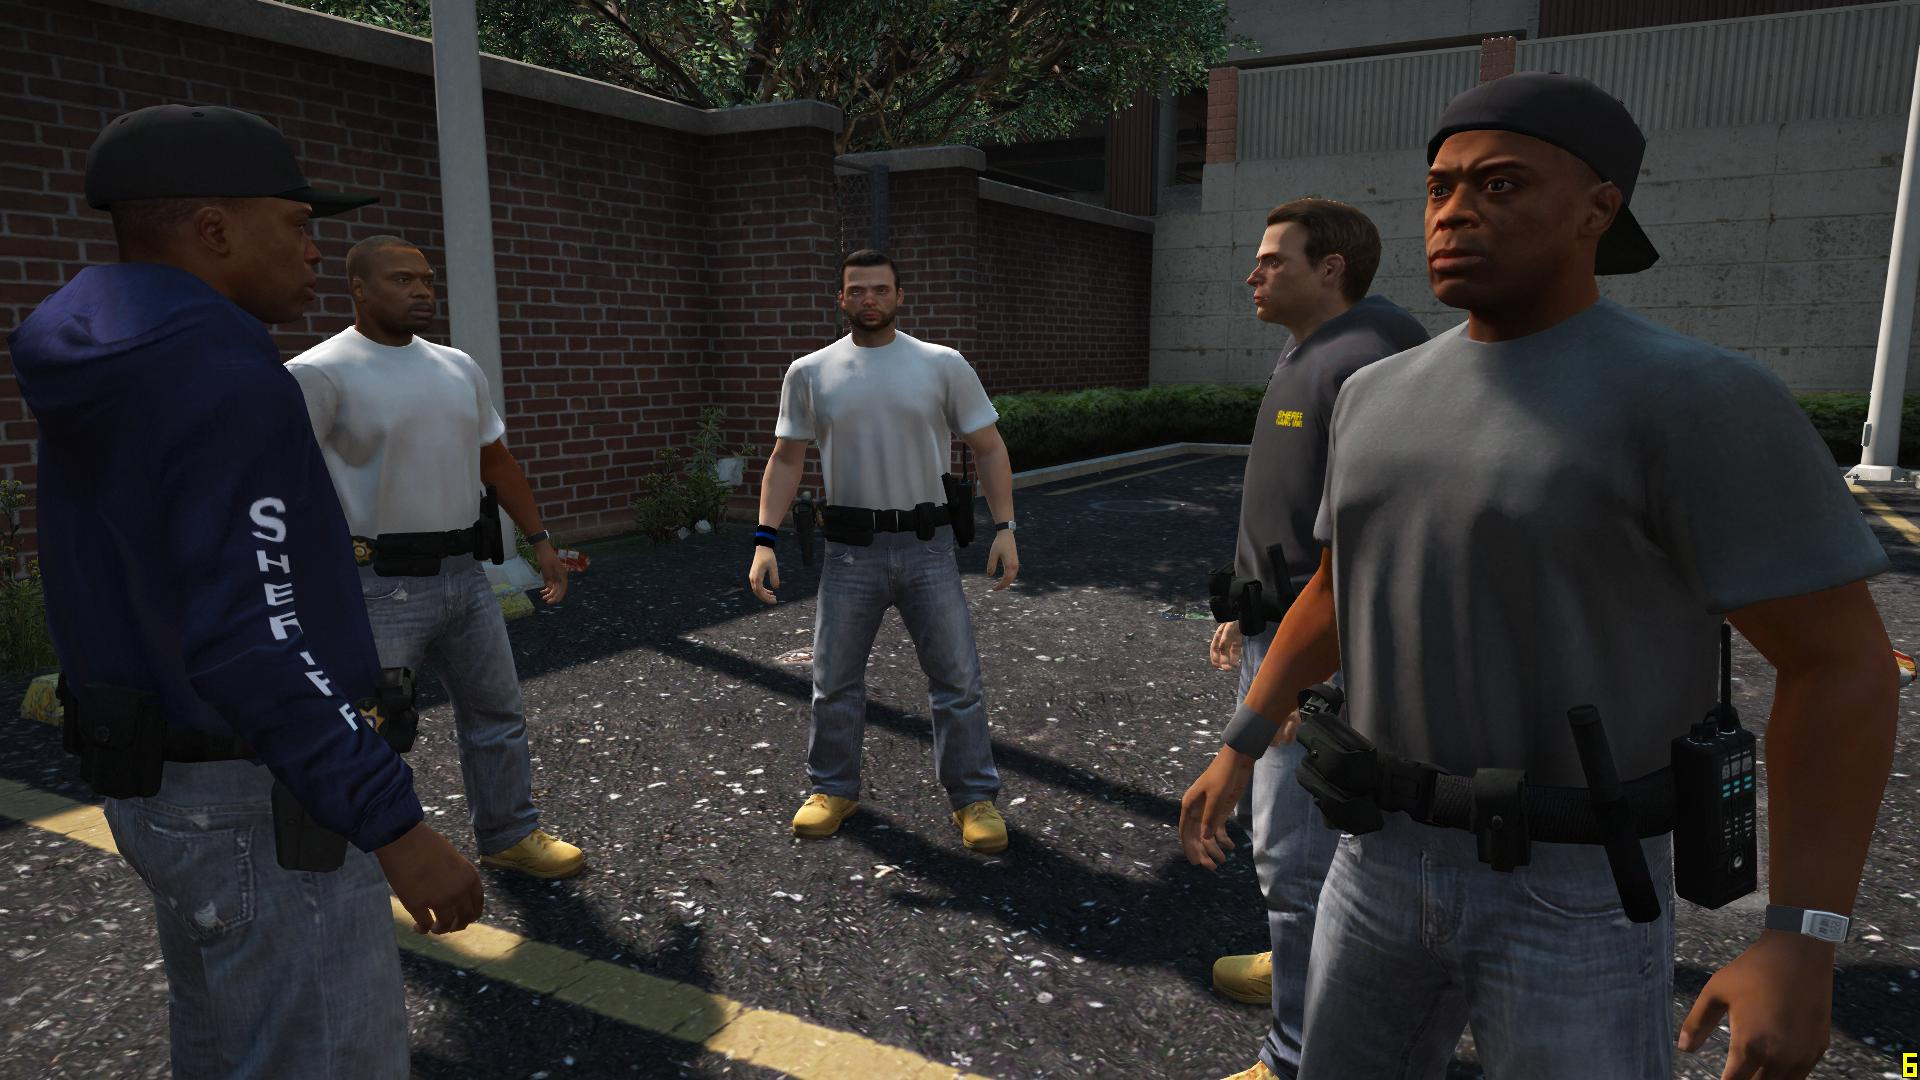 Guy gang. Lasd gang Unit. Los Angeles Sheriff Department gangs. Gang Unit. Jump out boys lasd.